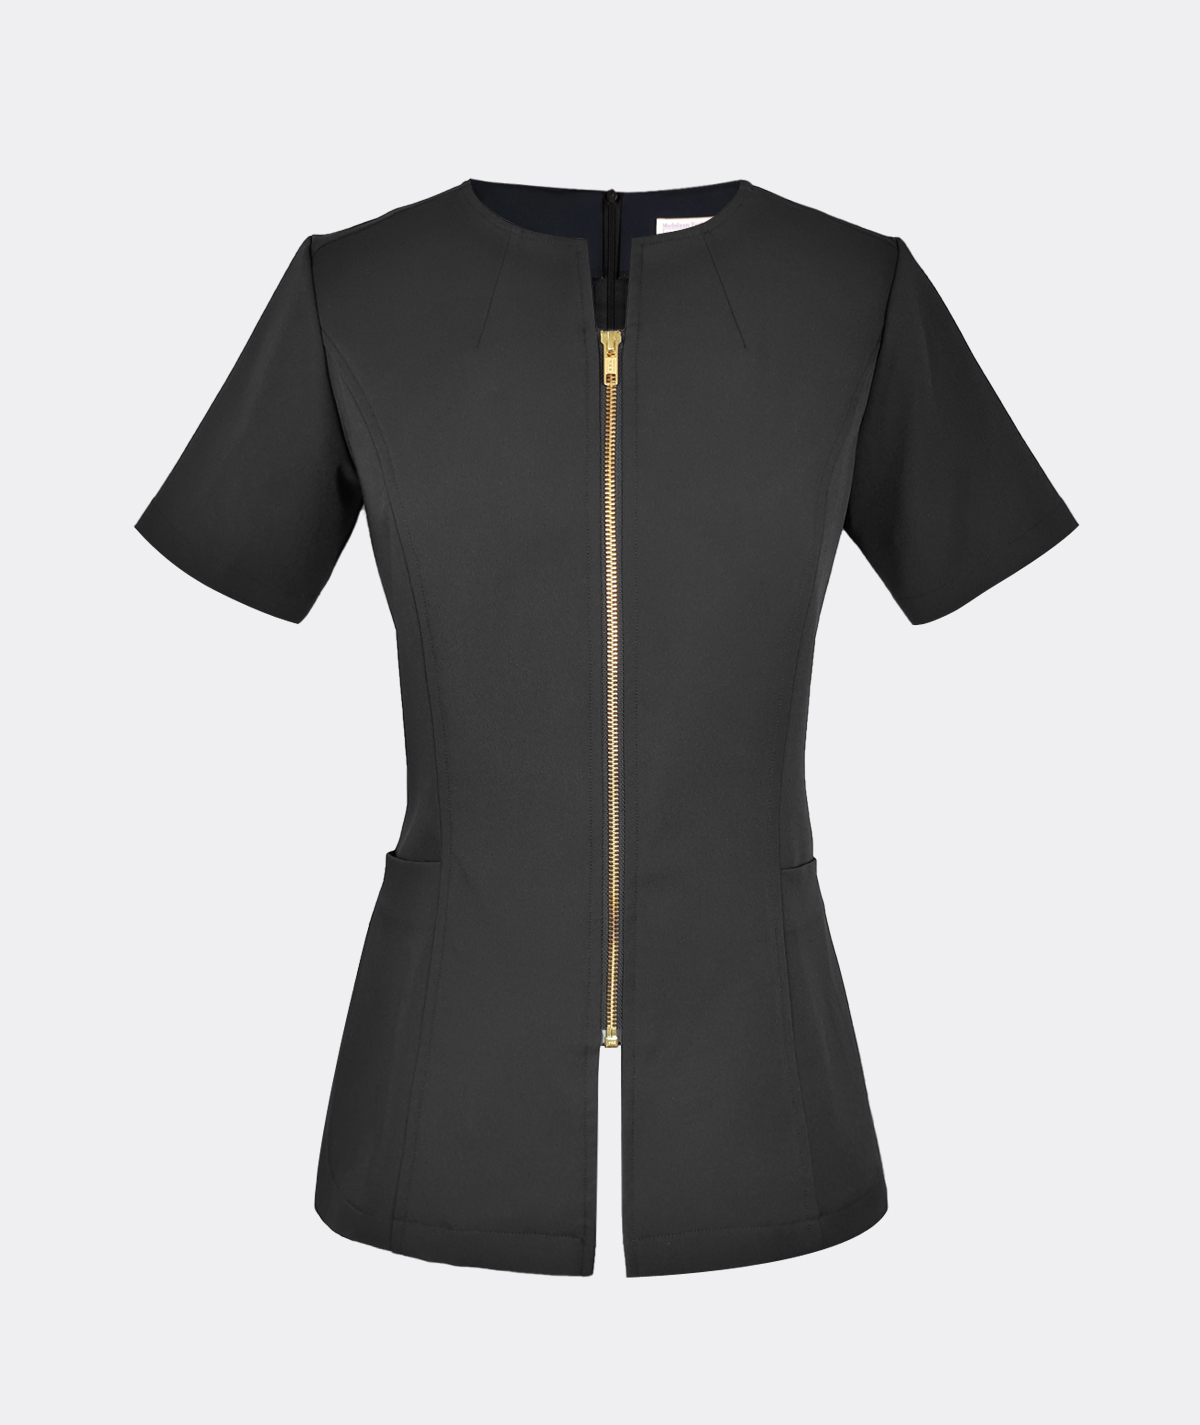 Modern ladies top fashion zipper blouse black beauty consultant top